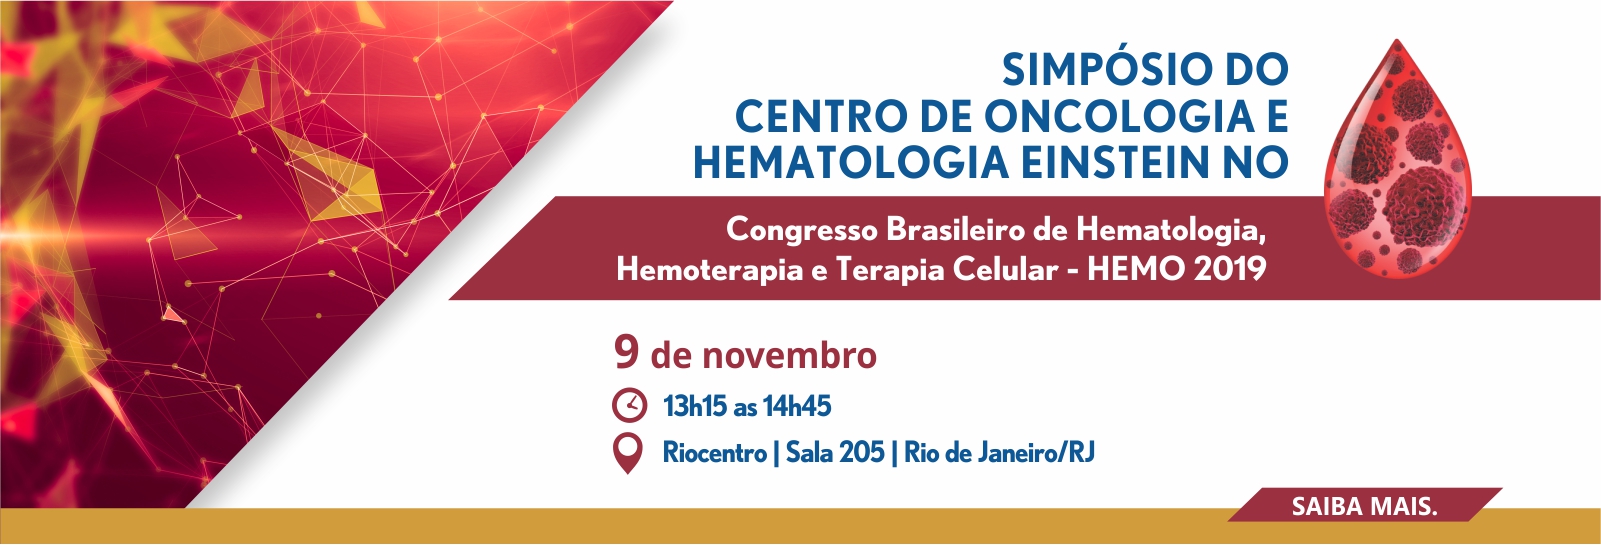 Simpósio do Centro de Oncologia e Hematologia Einstein no XIV Congresso Brasileiro de Cirurgia Oncológica